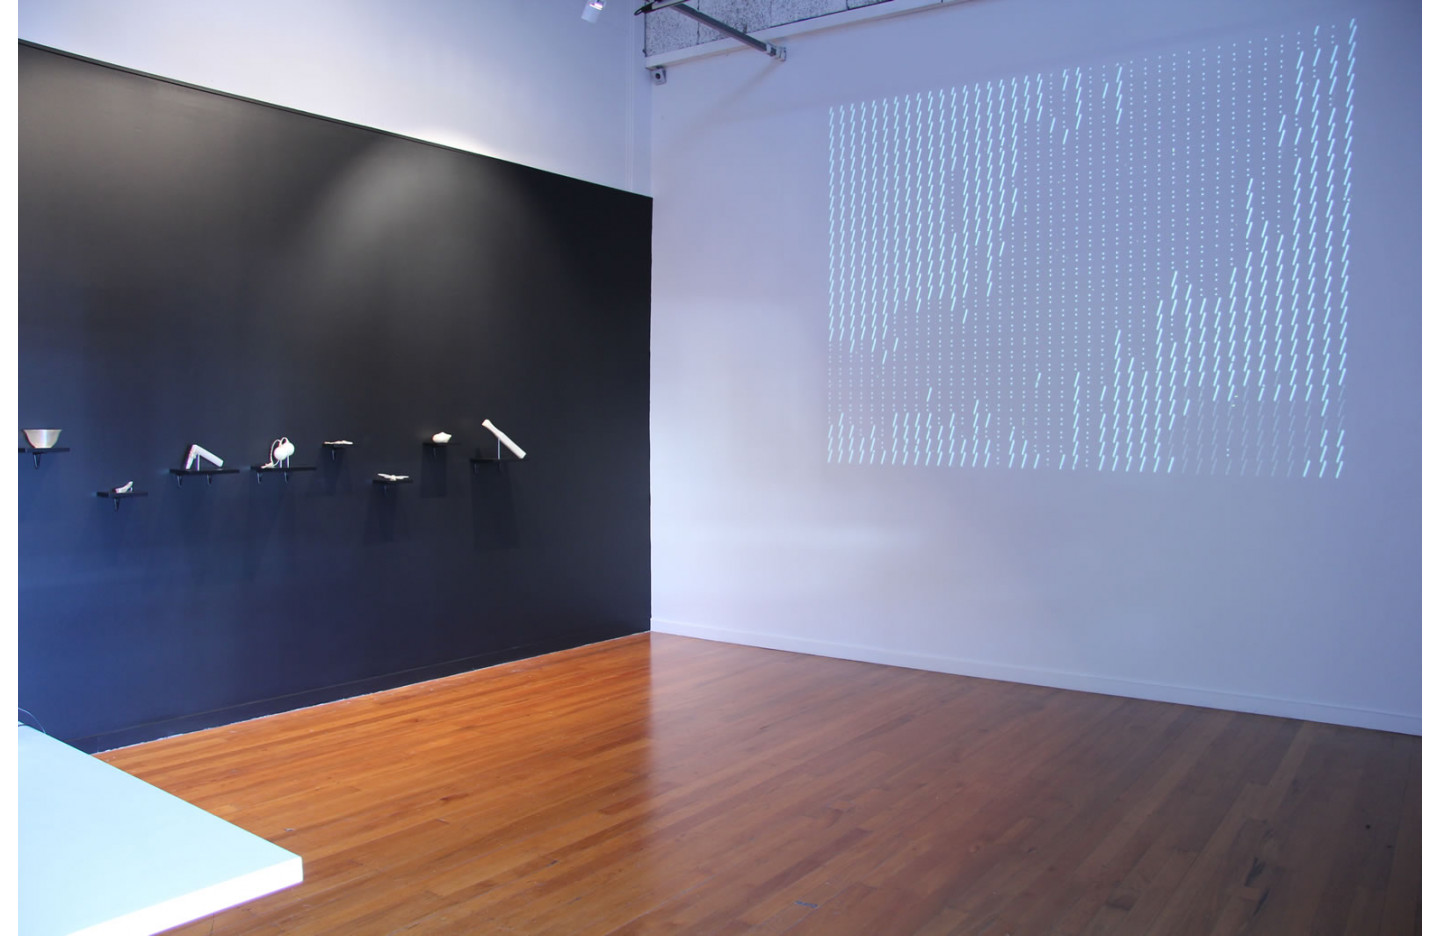 Installation image for 'Social Interface', Ramp Gallery Apr 2012. Including: Bronwyn Holloway-Smith, Vaimaila Urale & Johann Nortje